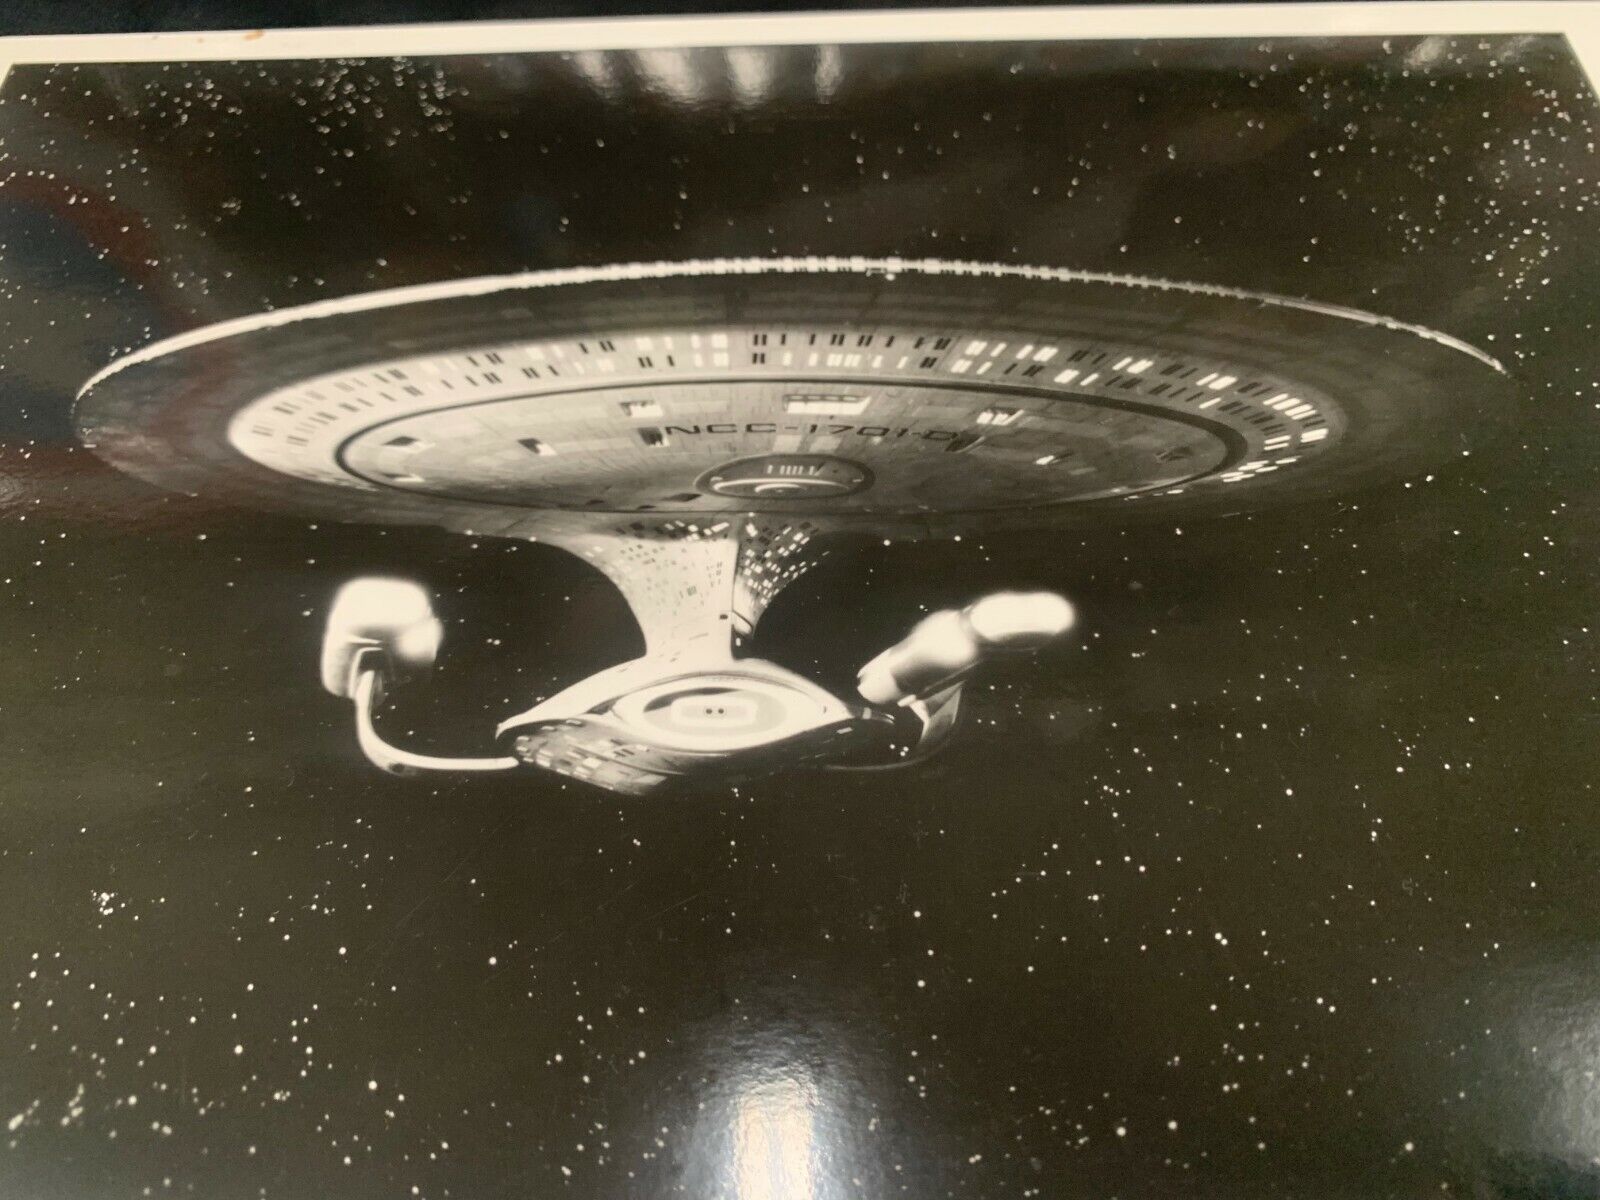 Star Trek The Next Generation StarShip Enterprise in Space B&W 8x10 Photo